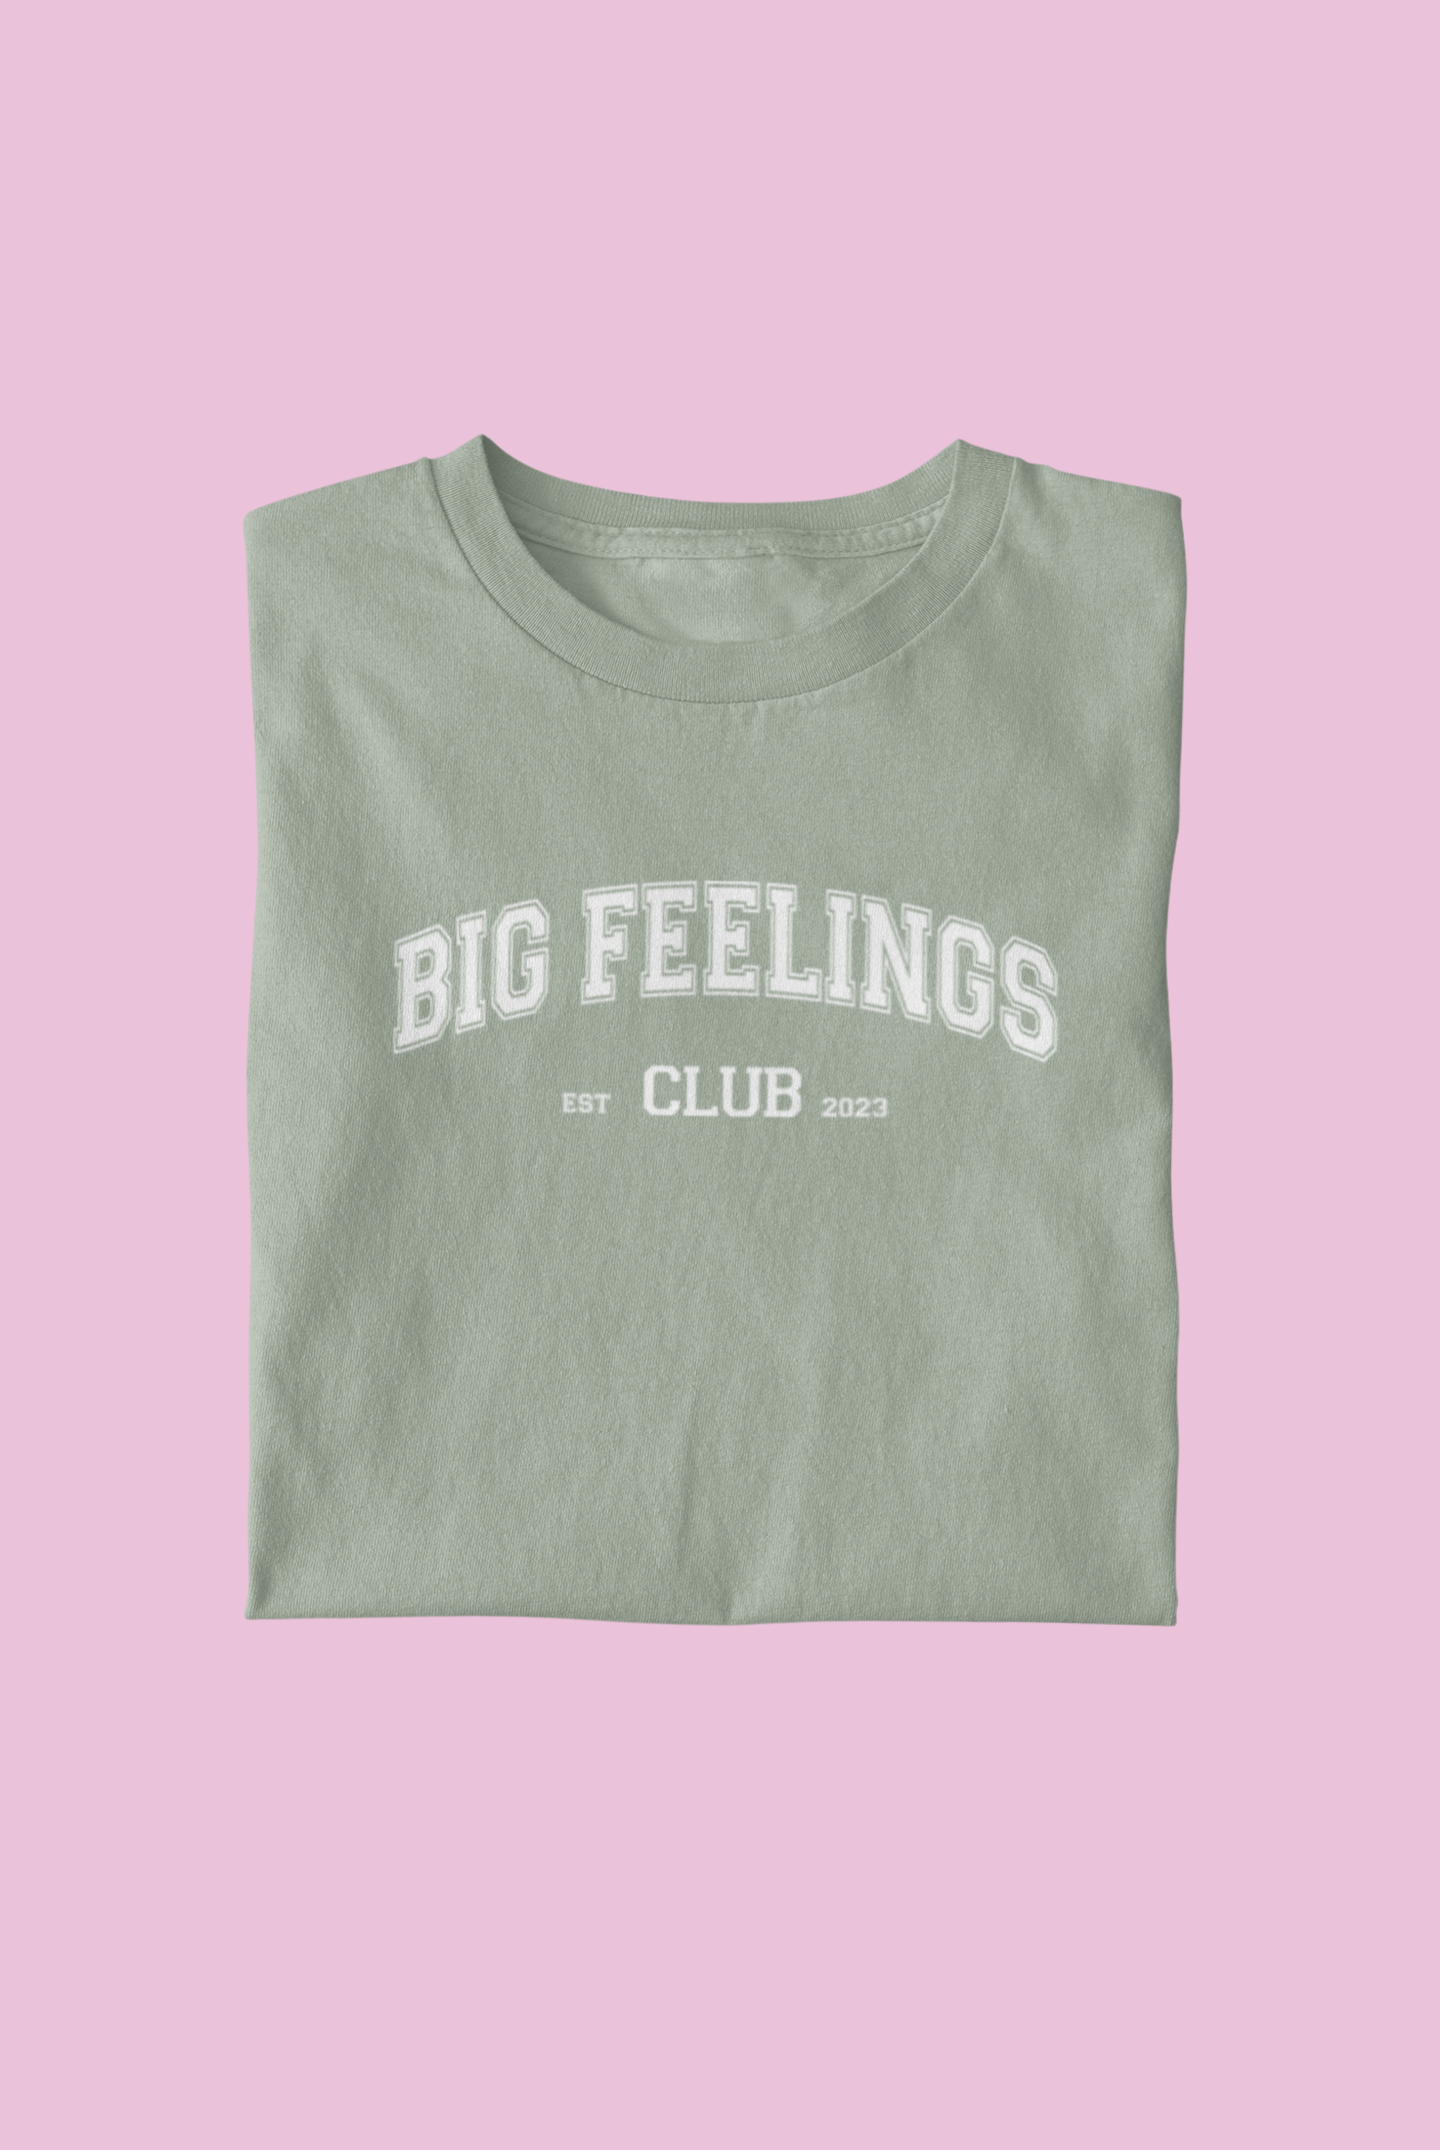 Big Feelings club  - Adult Tee